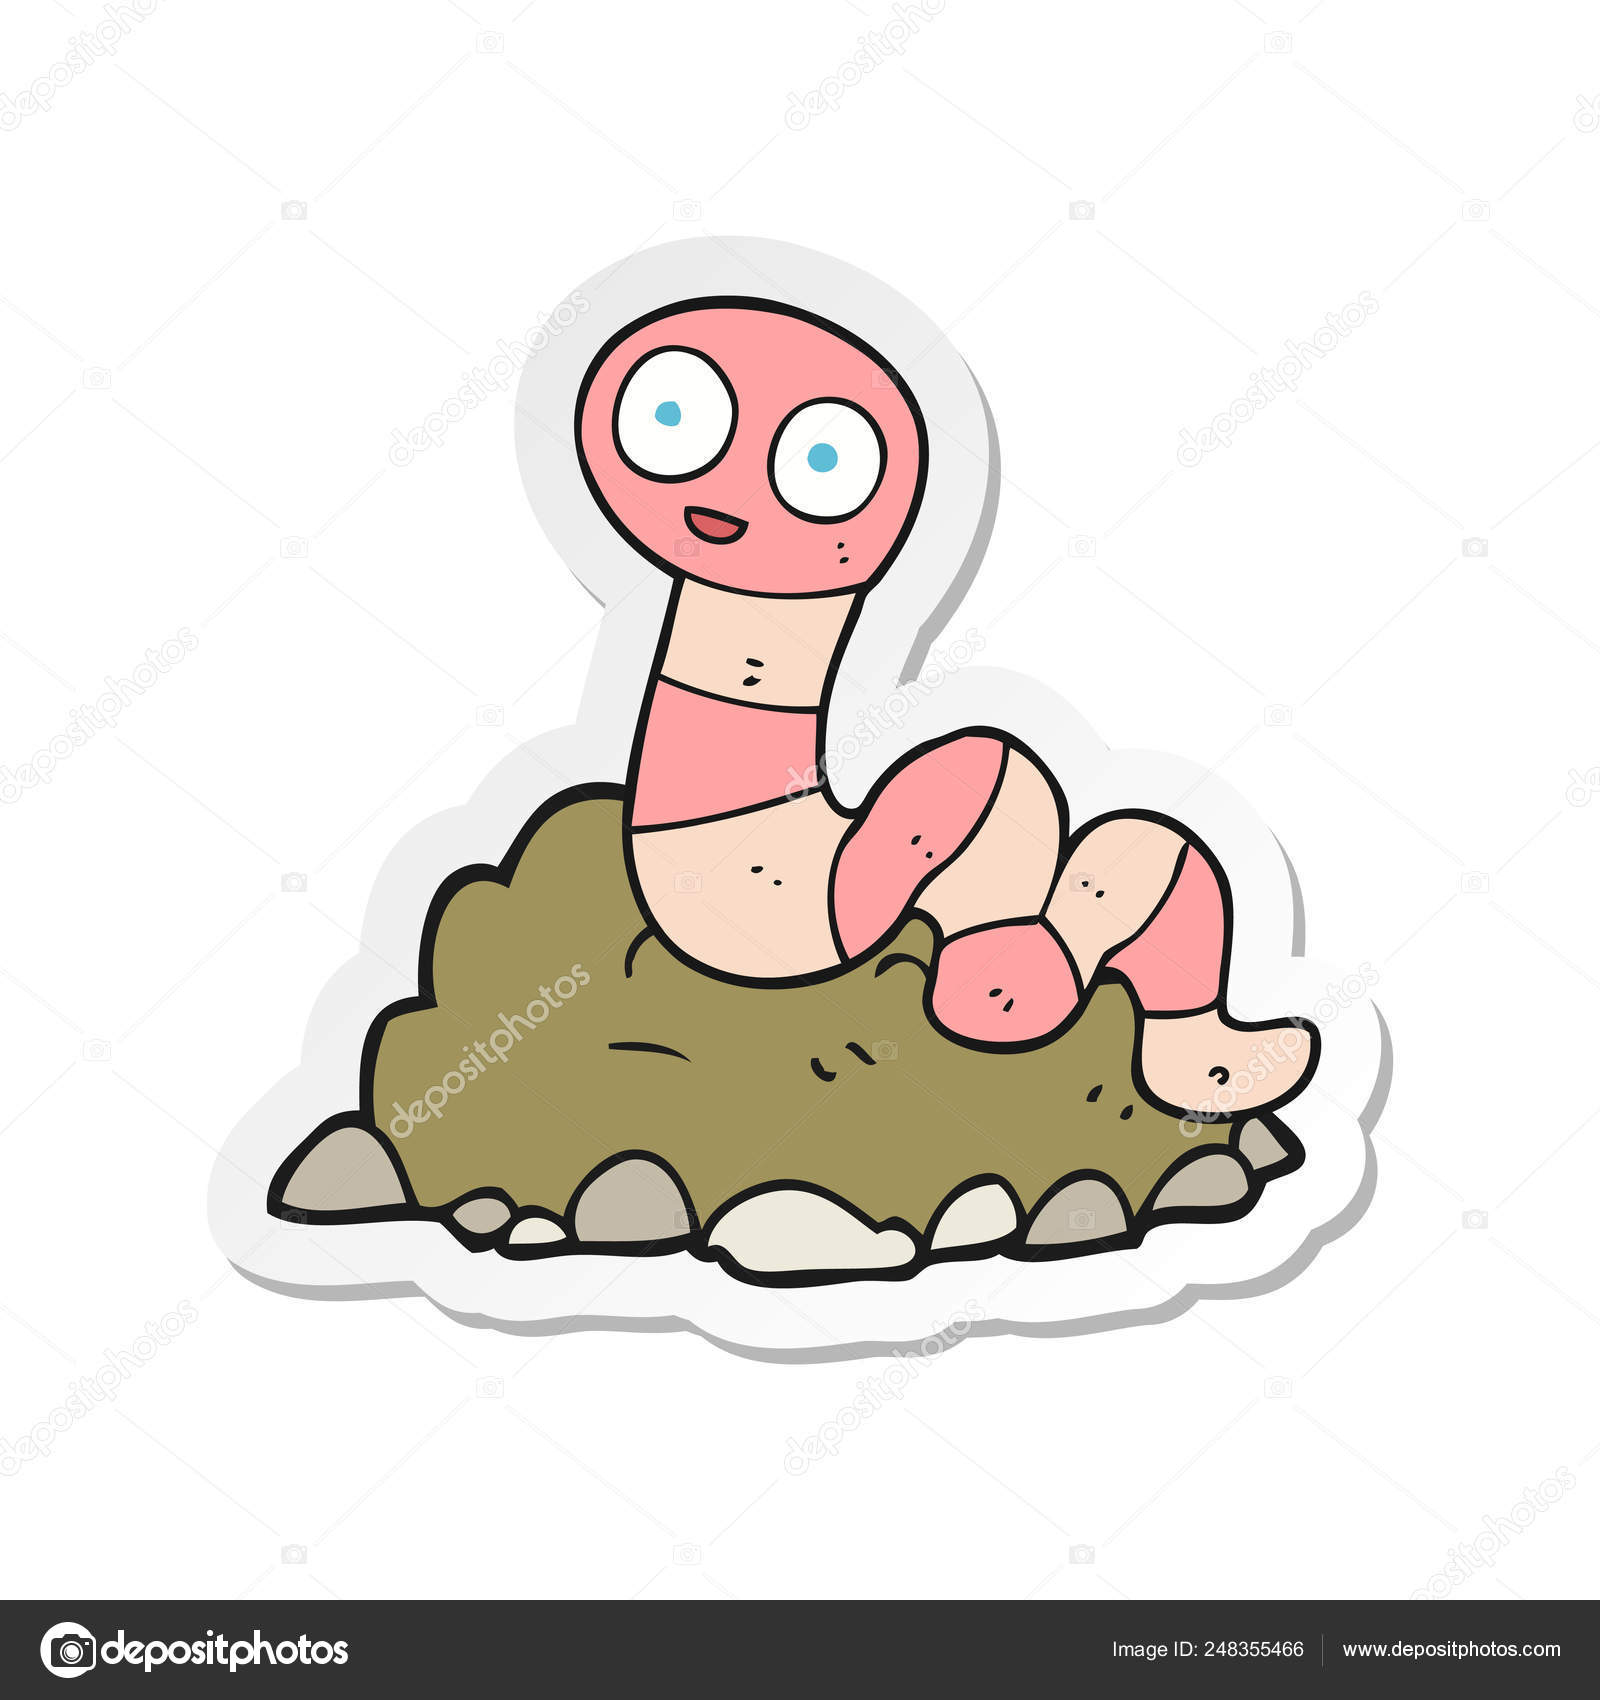 https://st4.depositphotos.com/1742172/24835/v/1600/depositphotos_248355466-stock-illustration-sticker-of-a-cartoon-earthworm.jpg